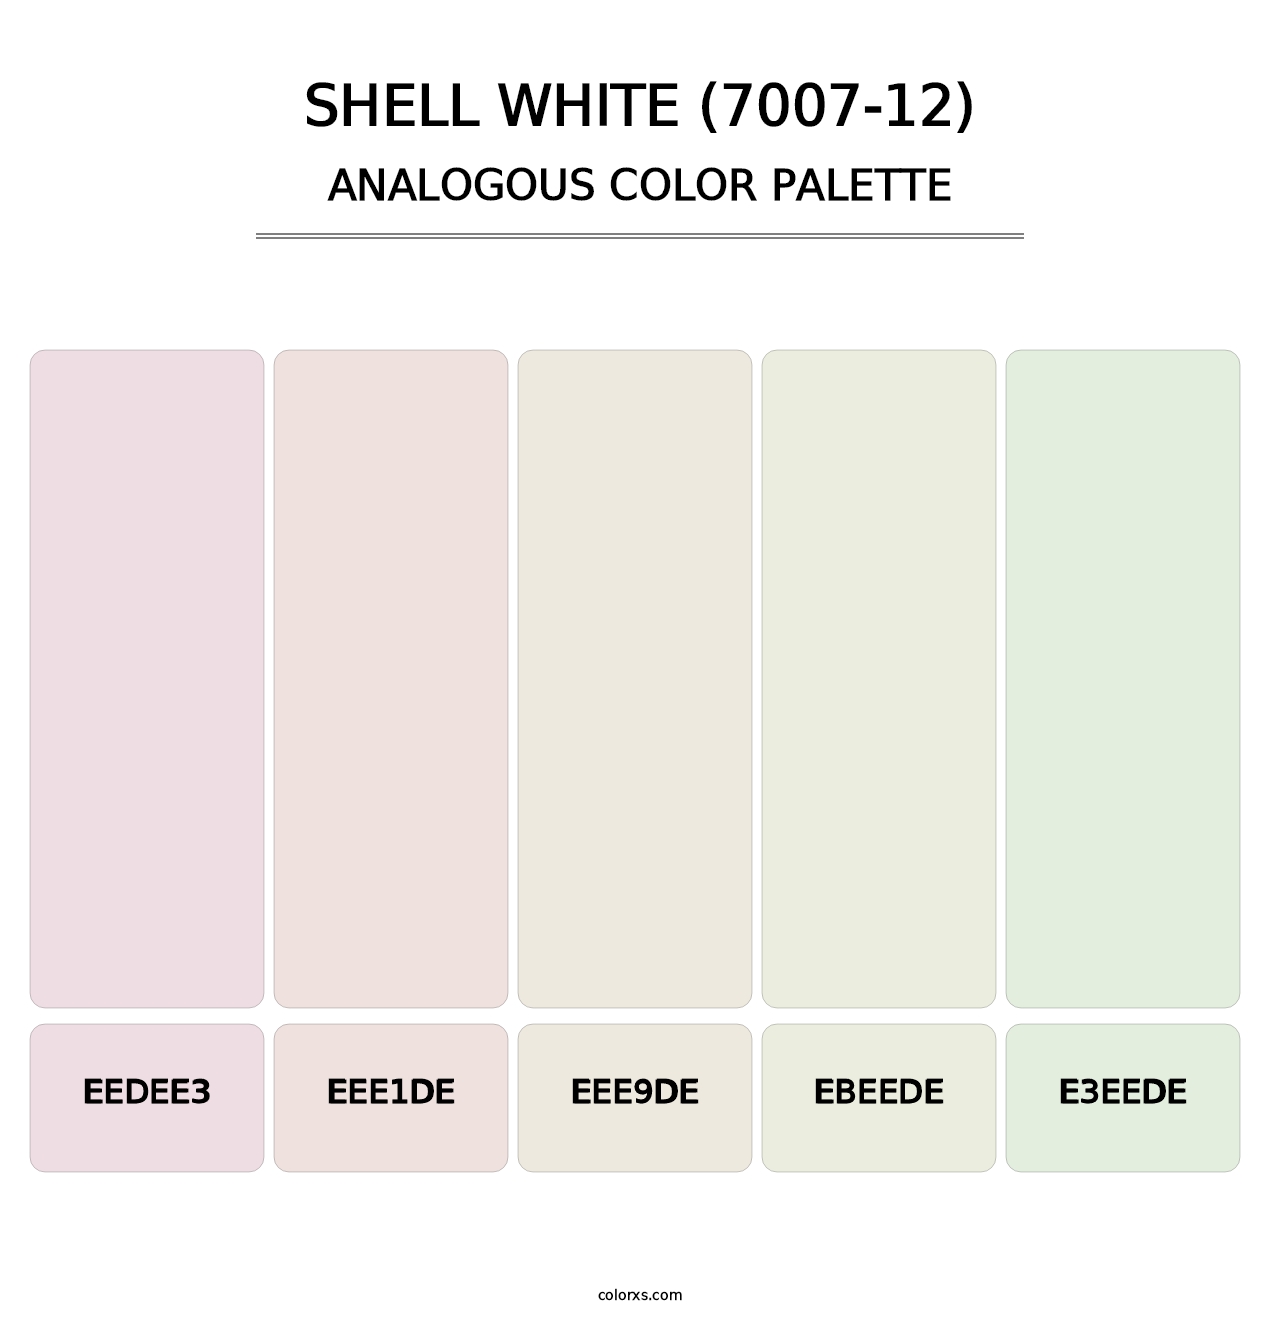 Shell White (7007-12) - Analogous Color Palette